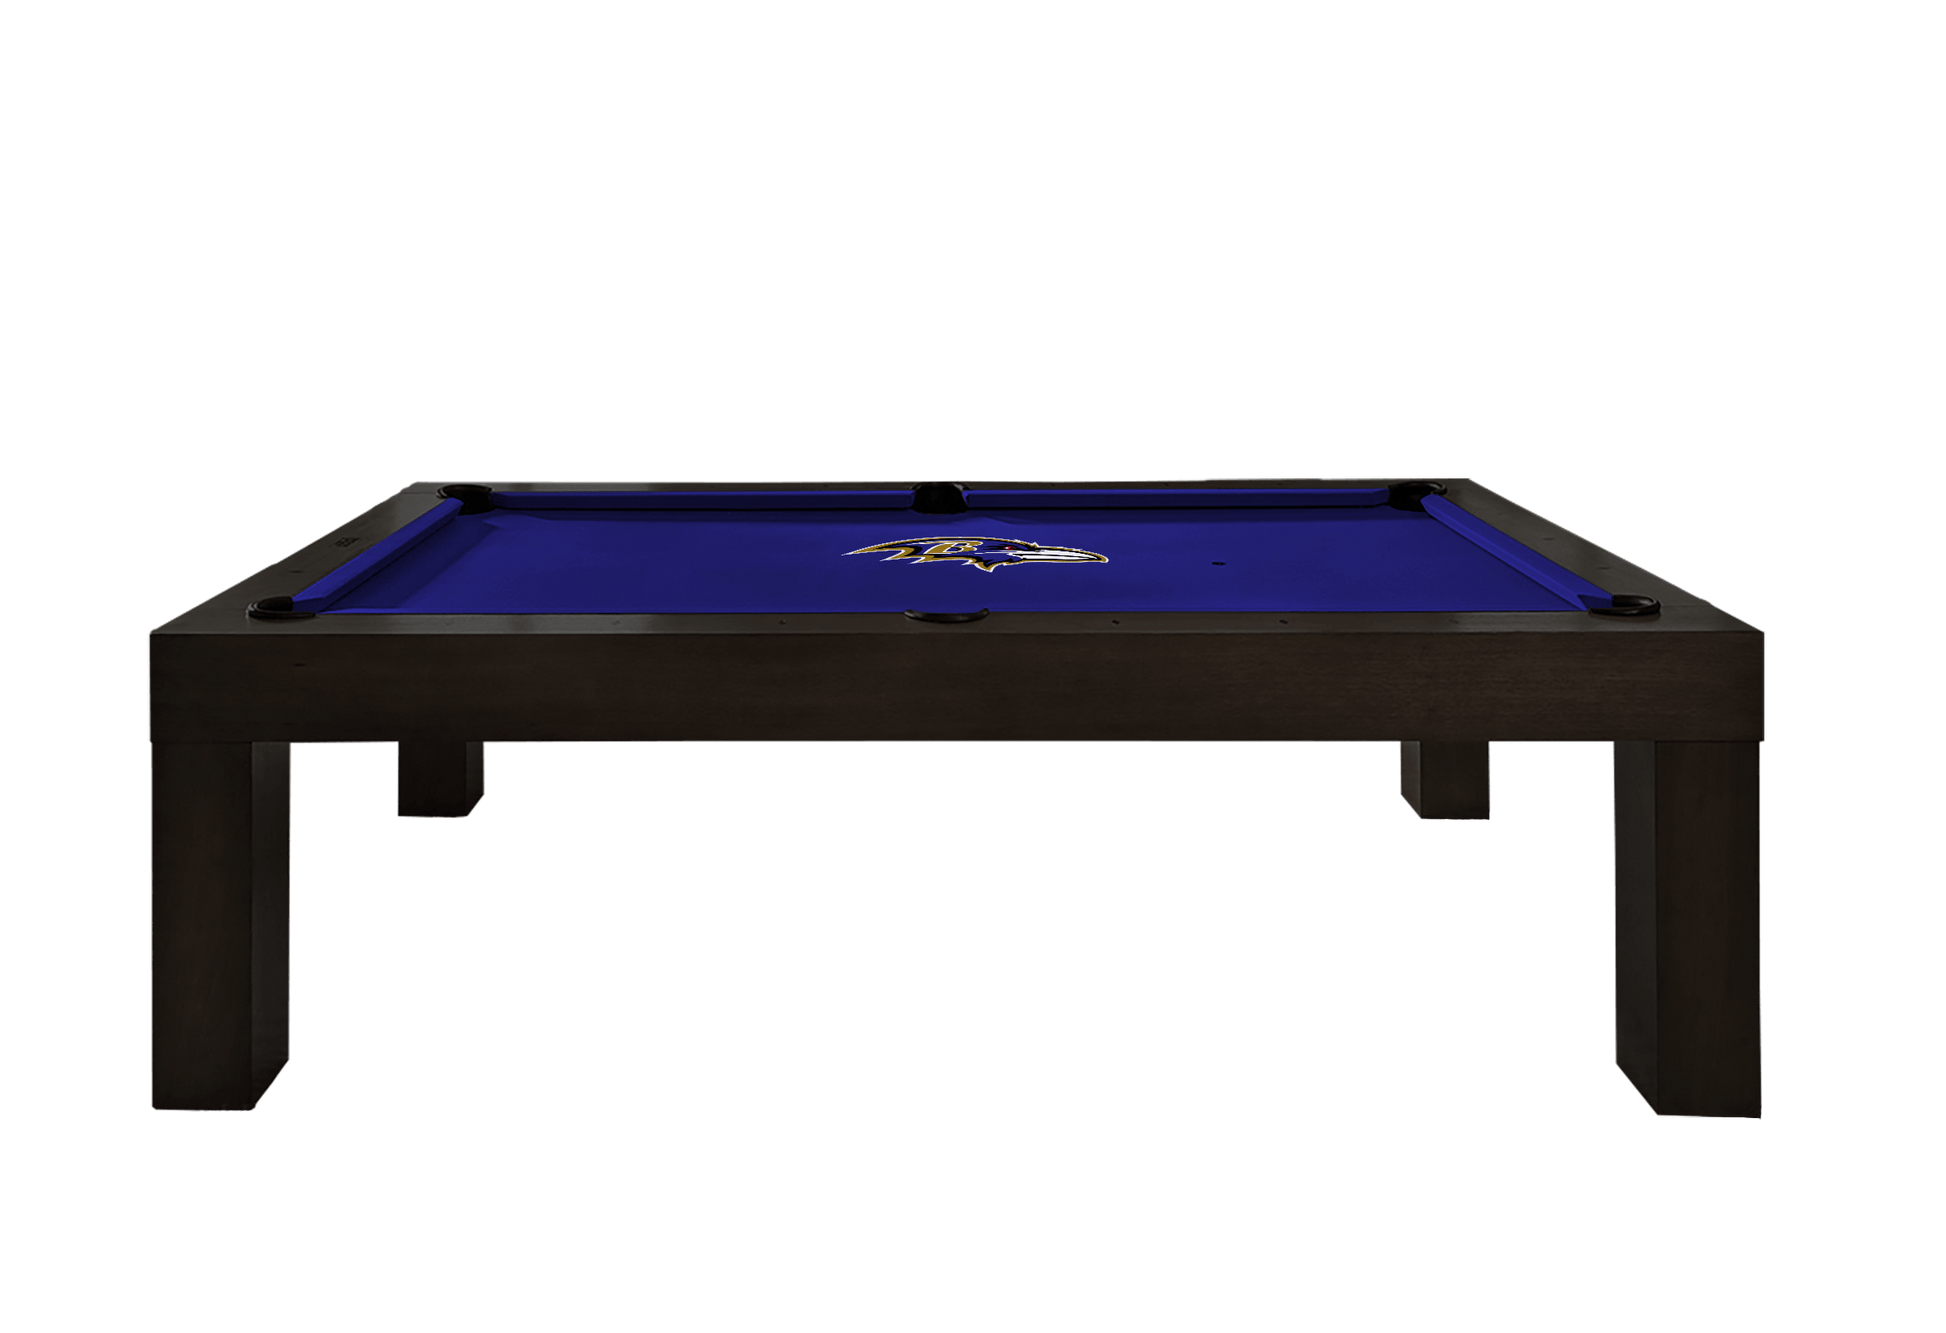 Baltimore Ravens Premium Pool Table Bundle - Black Ash Pool Bundle Home Arcade Games   